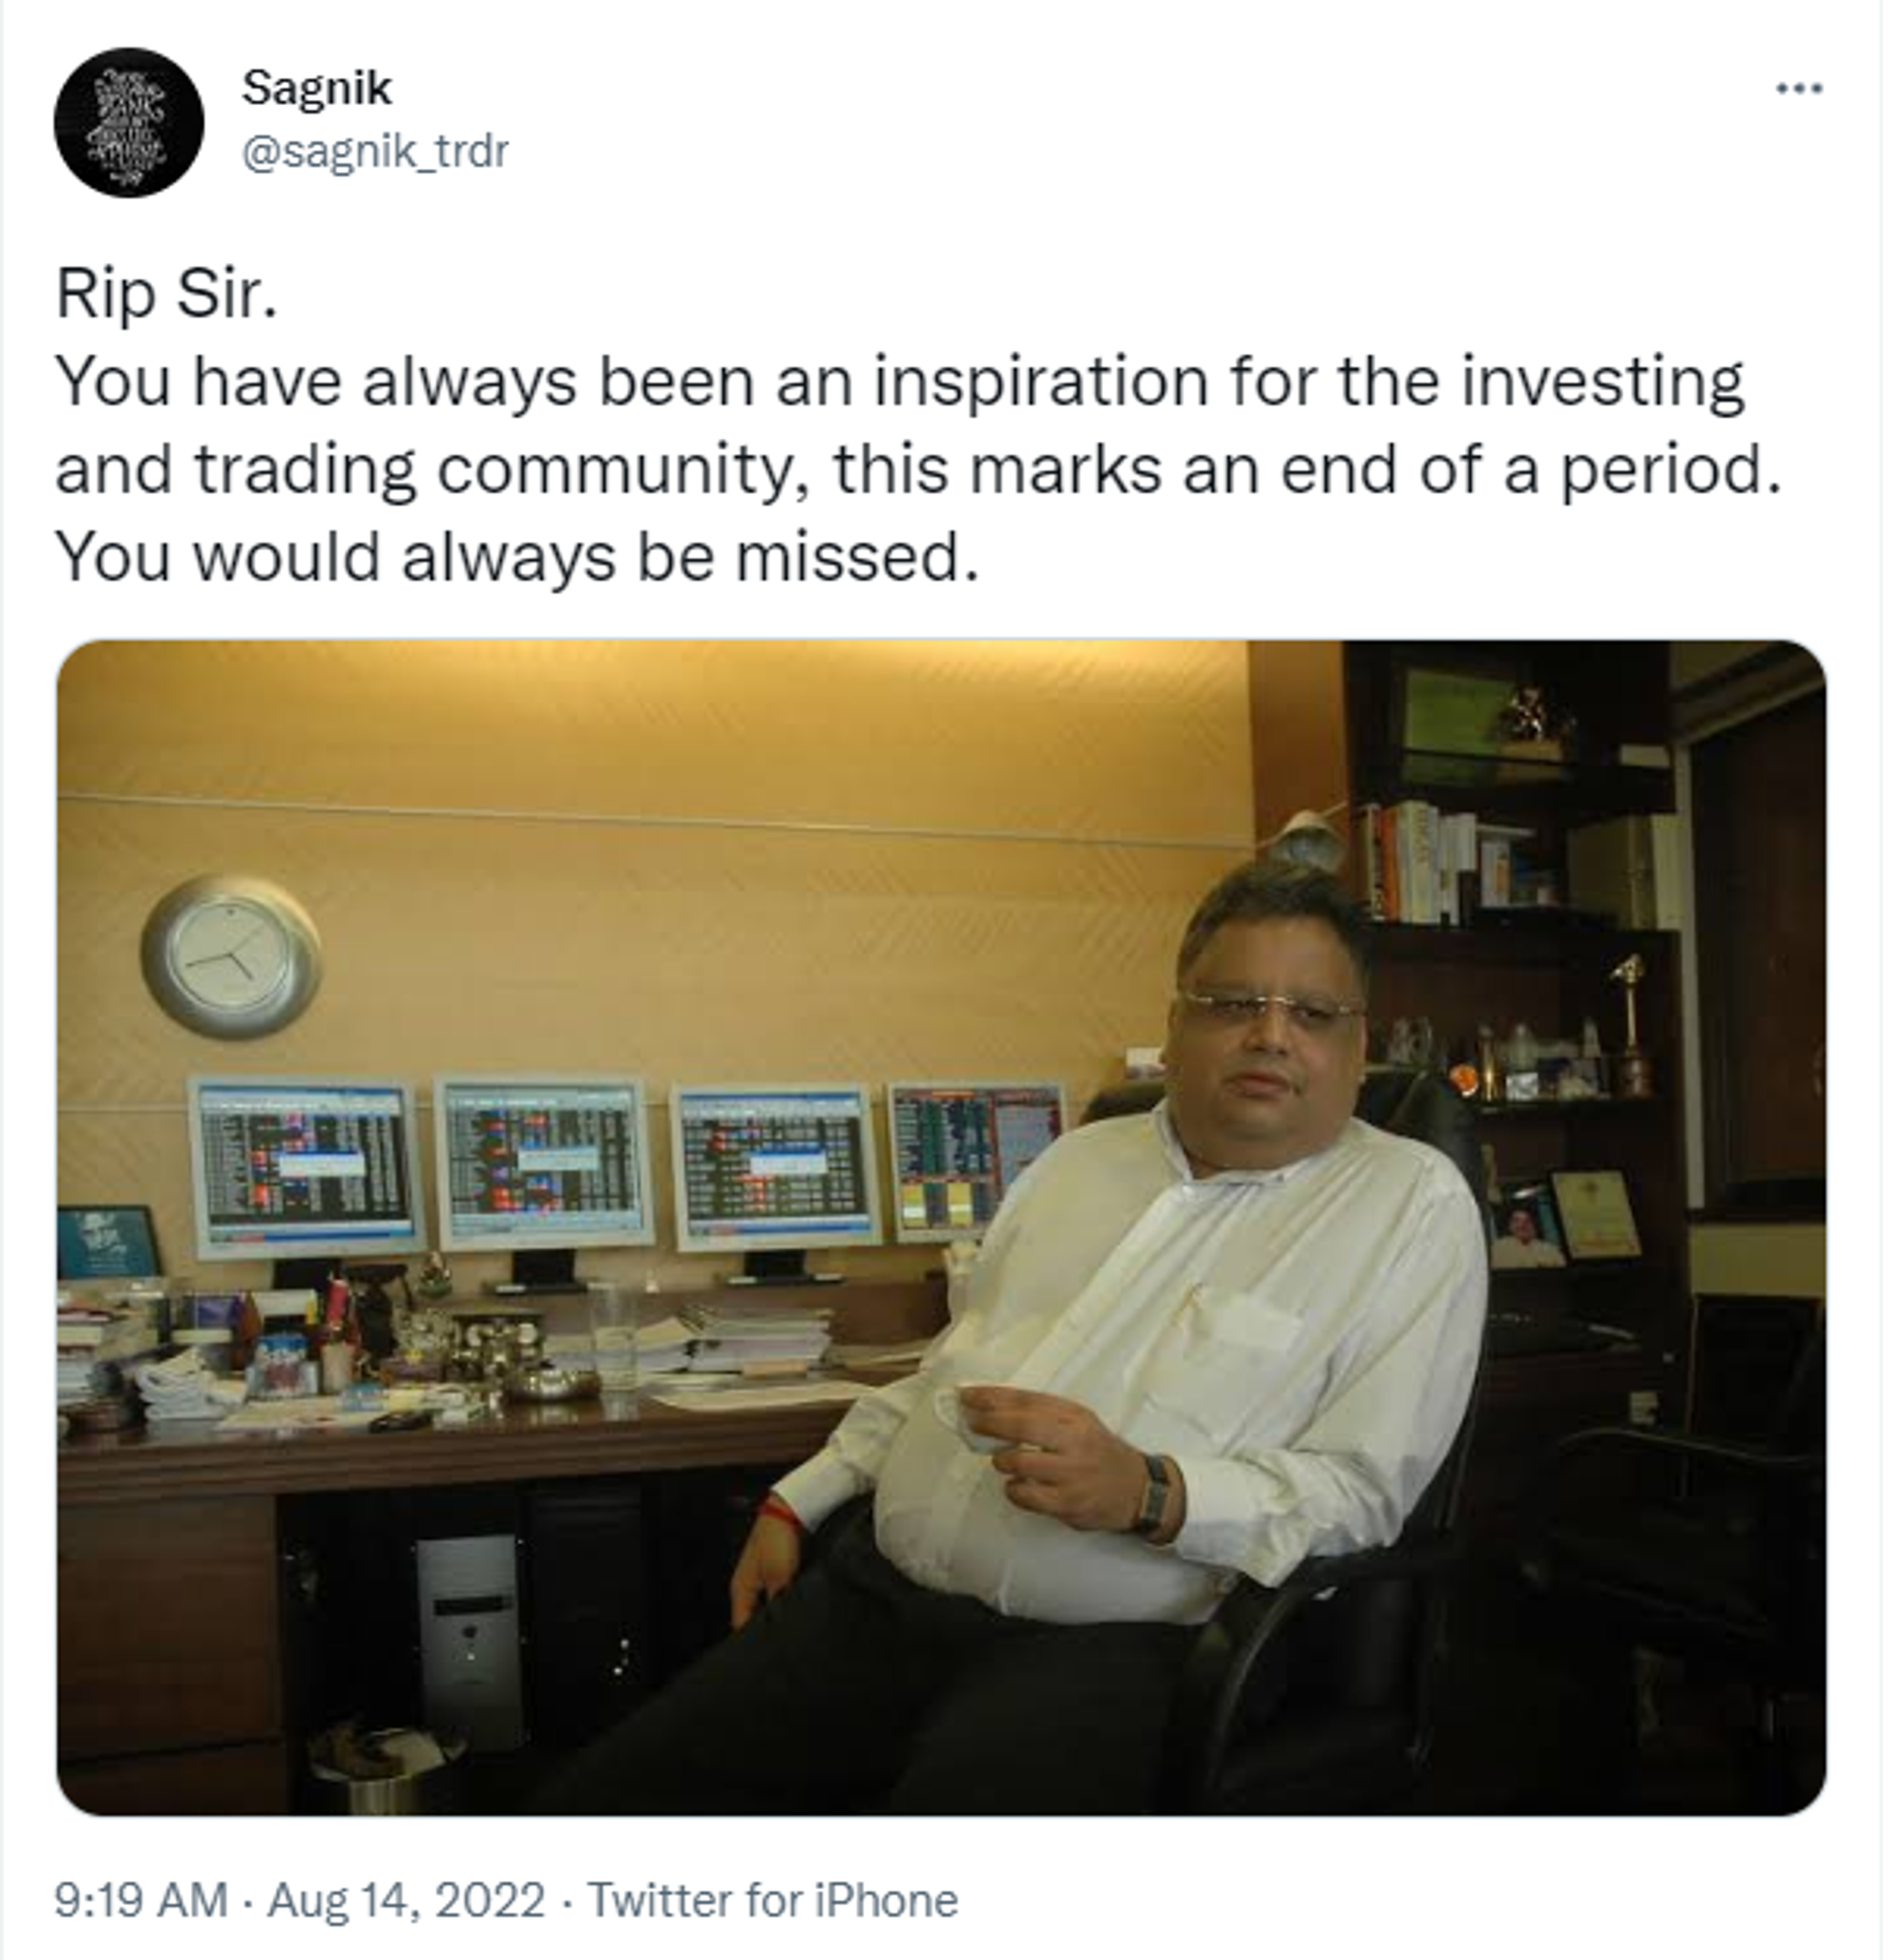 ‘India’s Warren Buffet’ veteran investor Rakesh Jhunjhunwala Passes Away at 62 - Sputnik International, 1920, 14.08.2022